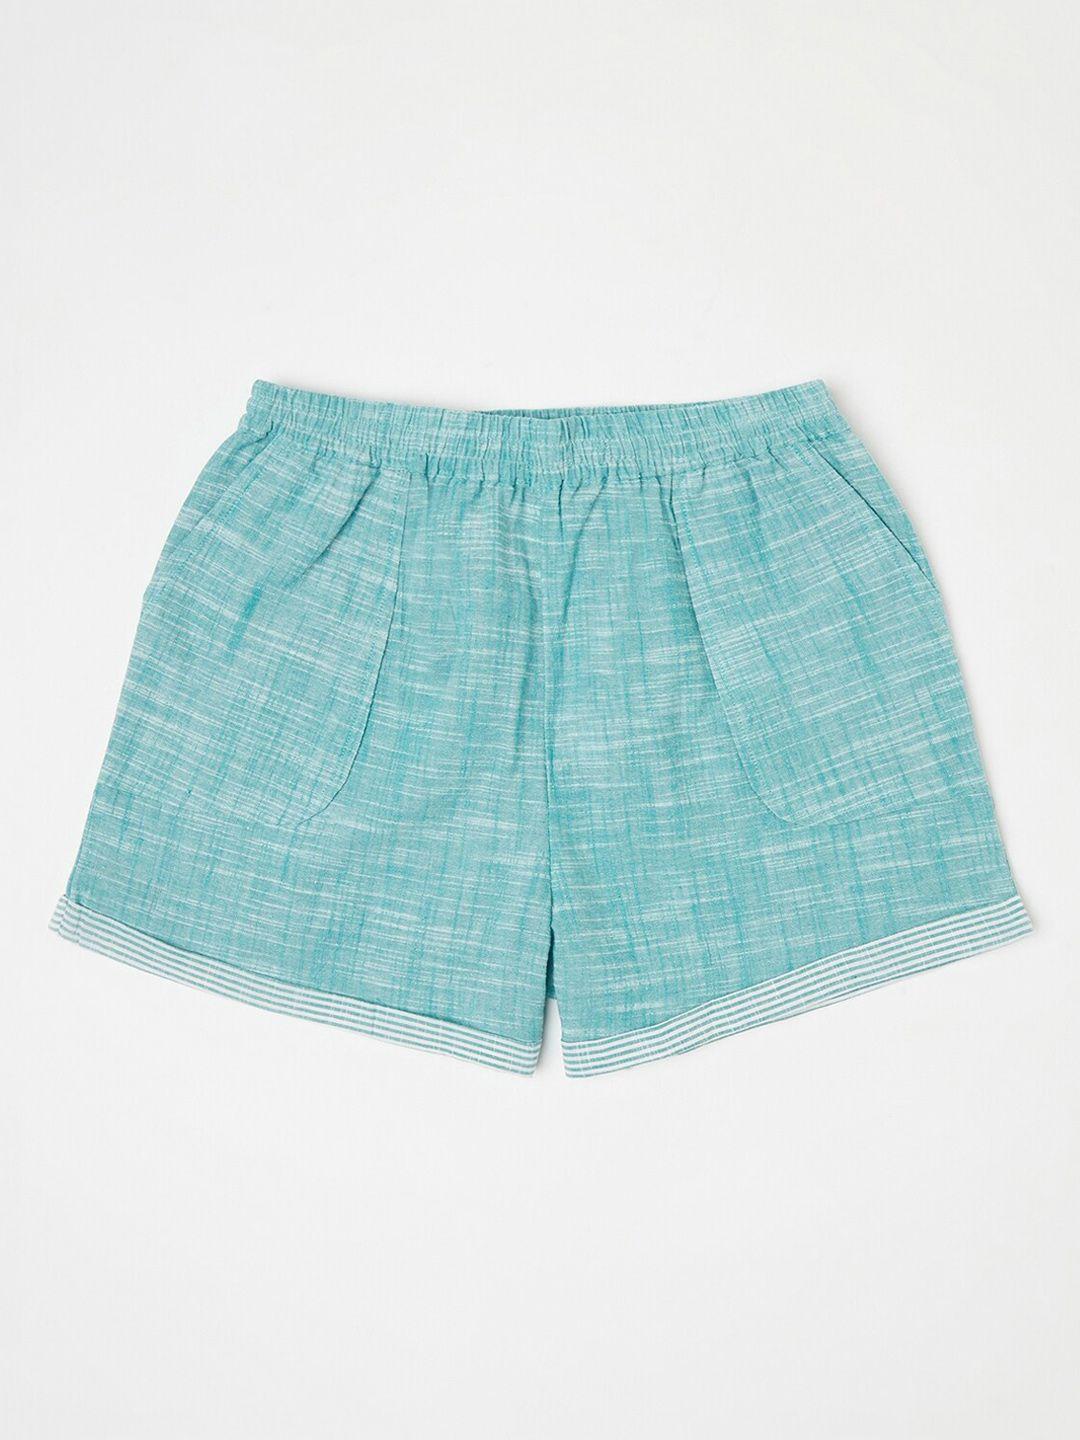 fabindia-women-green-printed-pure-cotton-regular-shorts